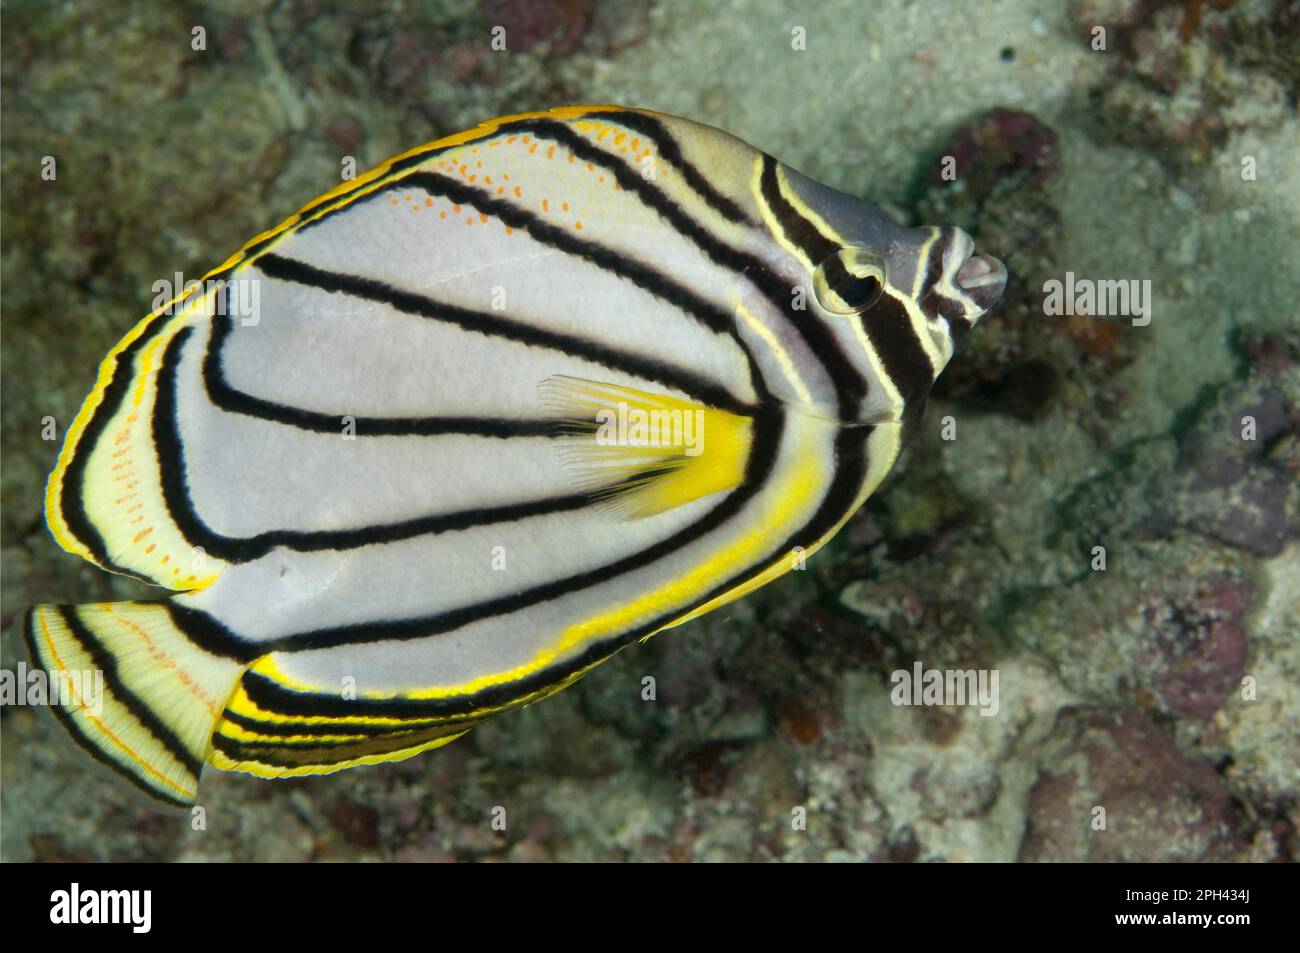 Meyers butterflyfish (Chaetodon meyeri), Banded Butterflyfish, Other animals, Fish, Perch-like, Animals, Butterflyfish, Meyer's Butterflyfish adult Stock Photo